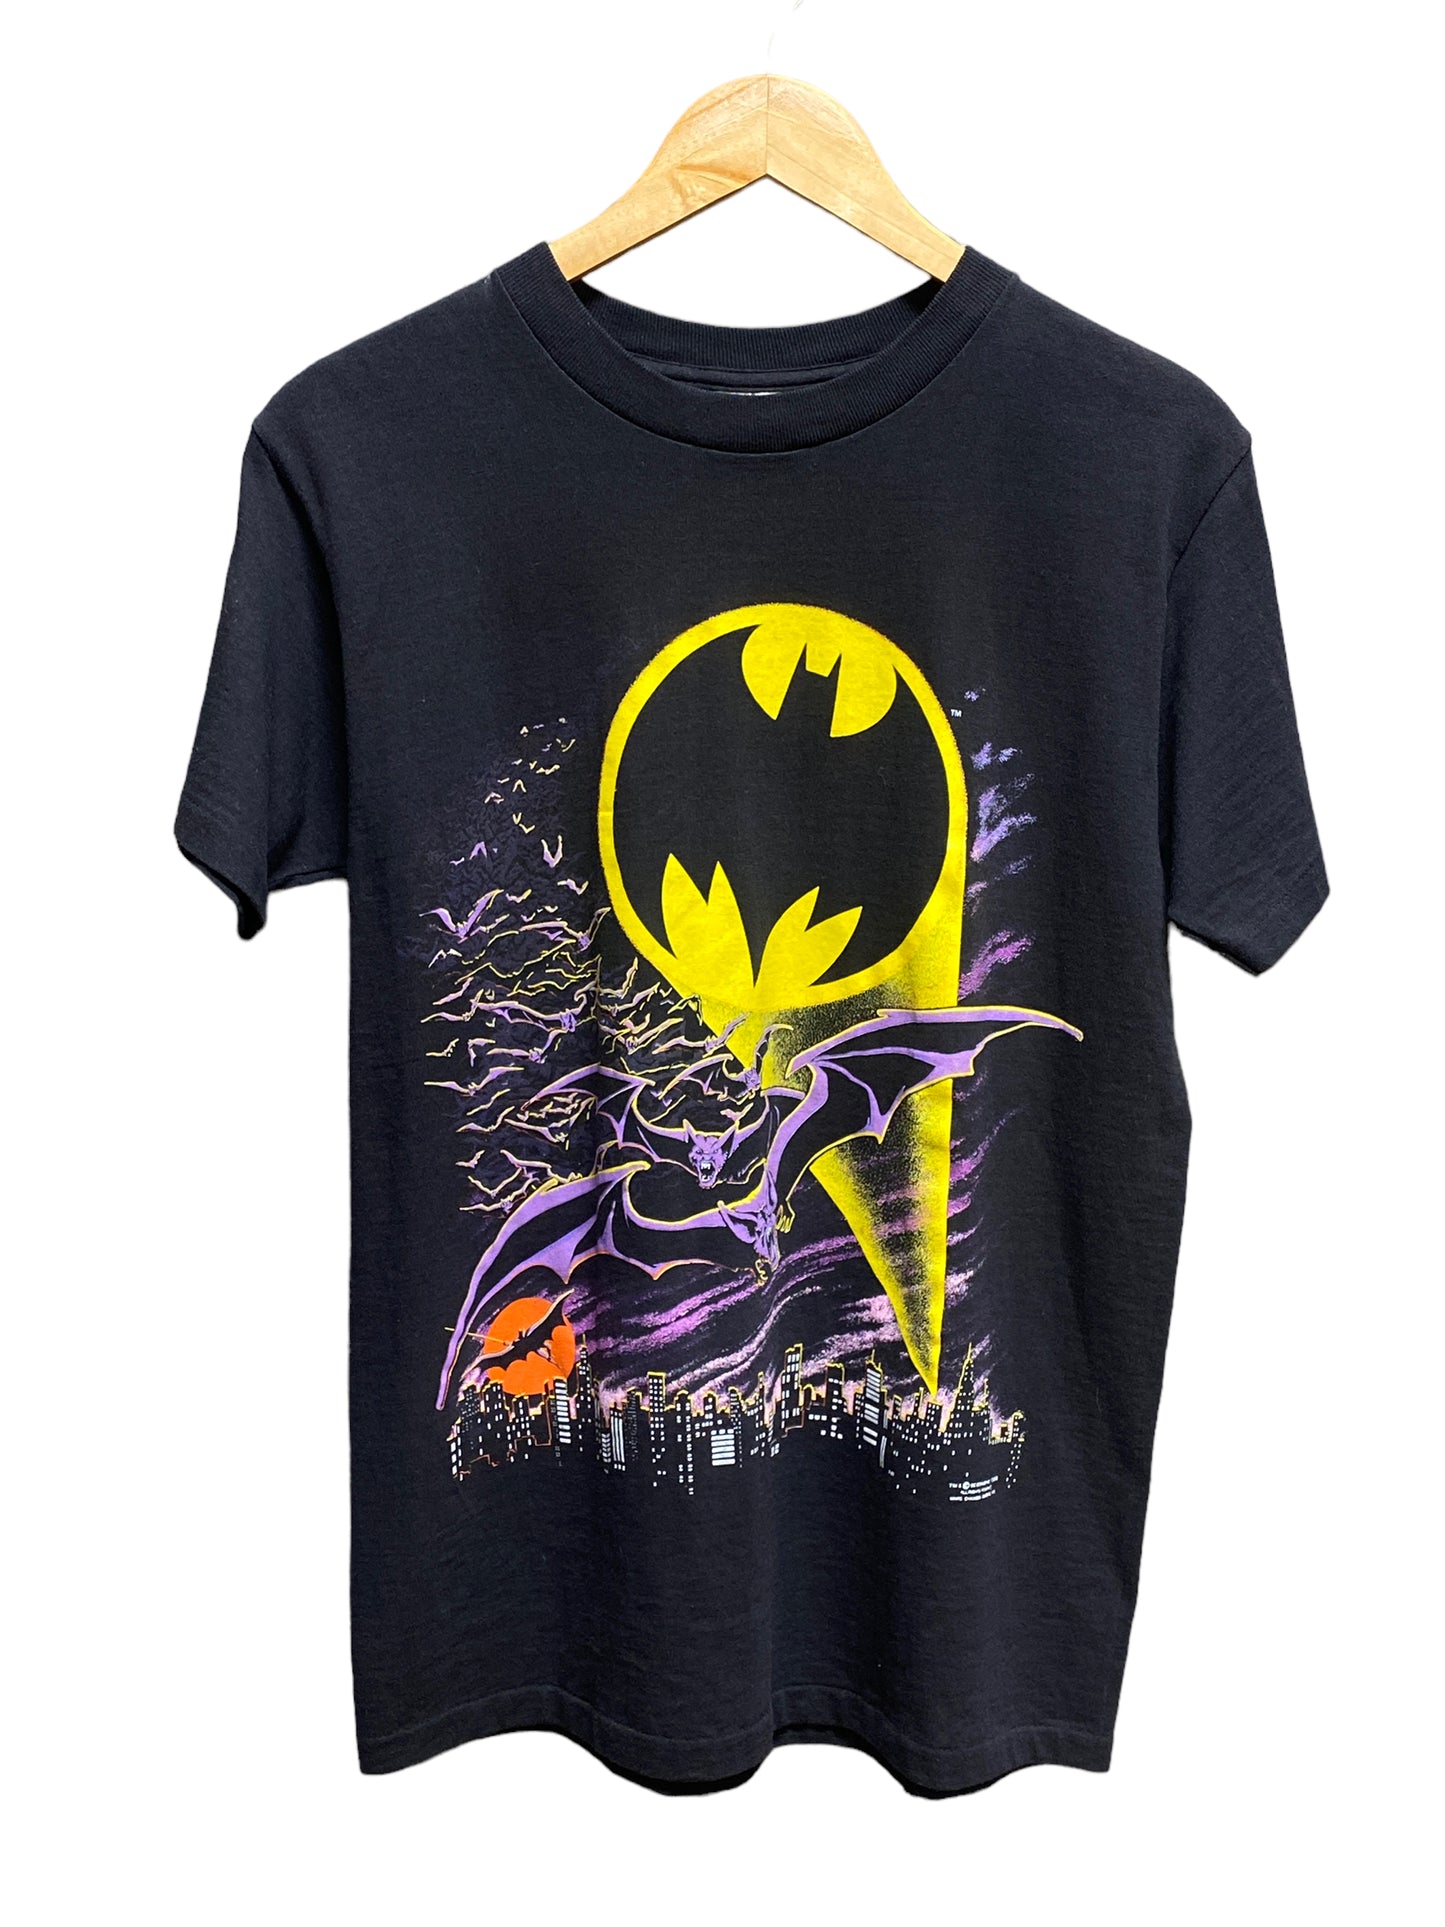 Vintage 1988 Batman Bat Signal Comic Graphic Tee Size Medium